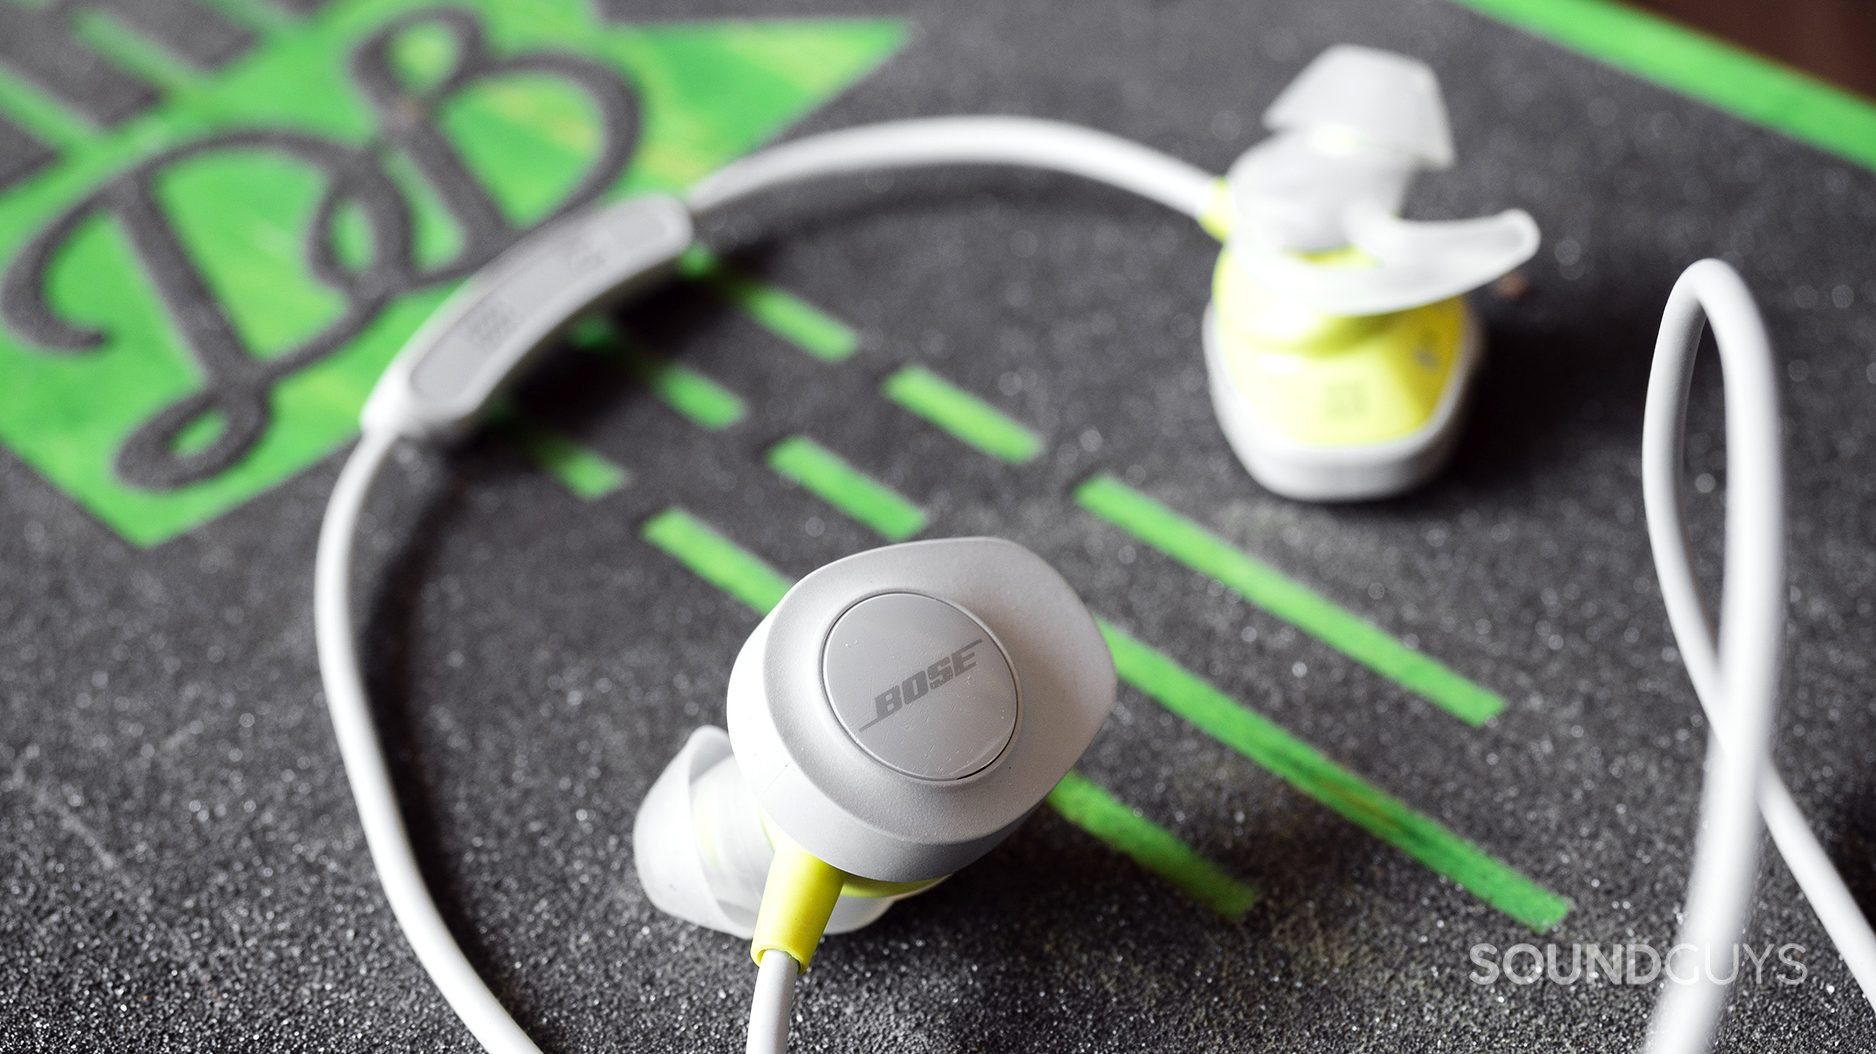 The Bose SoundSport Wireless earbuds on a skateboard.